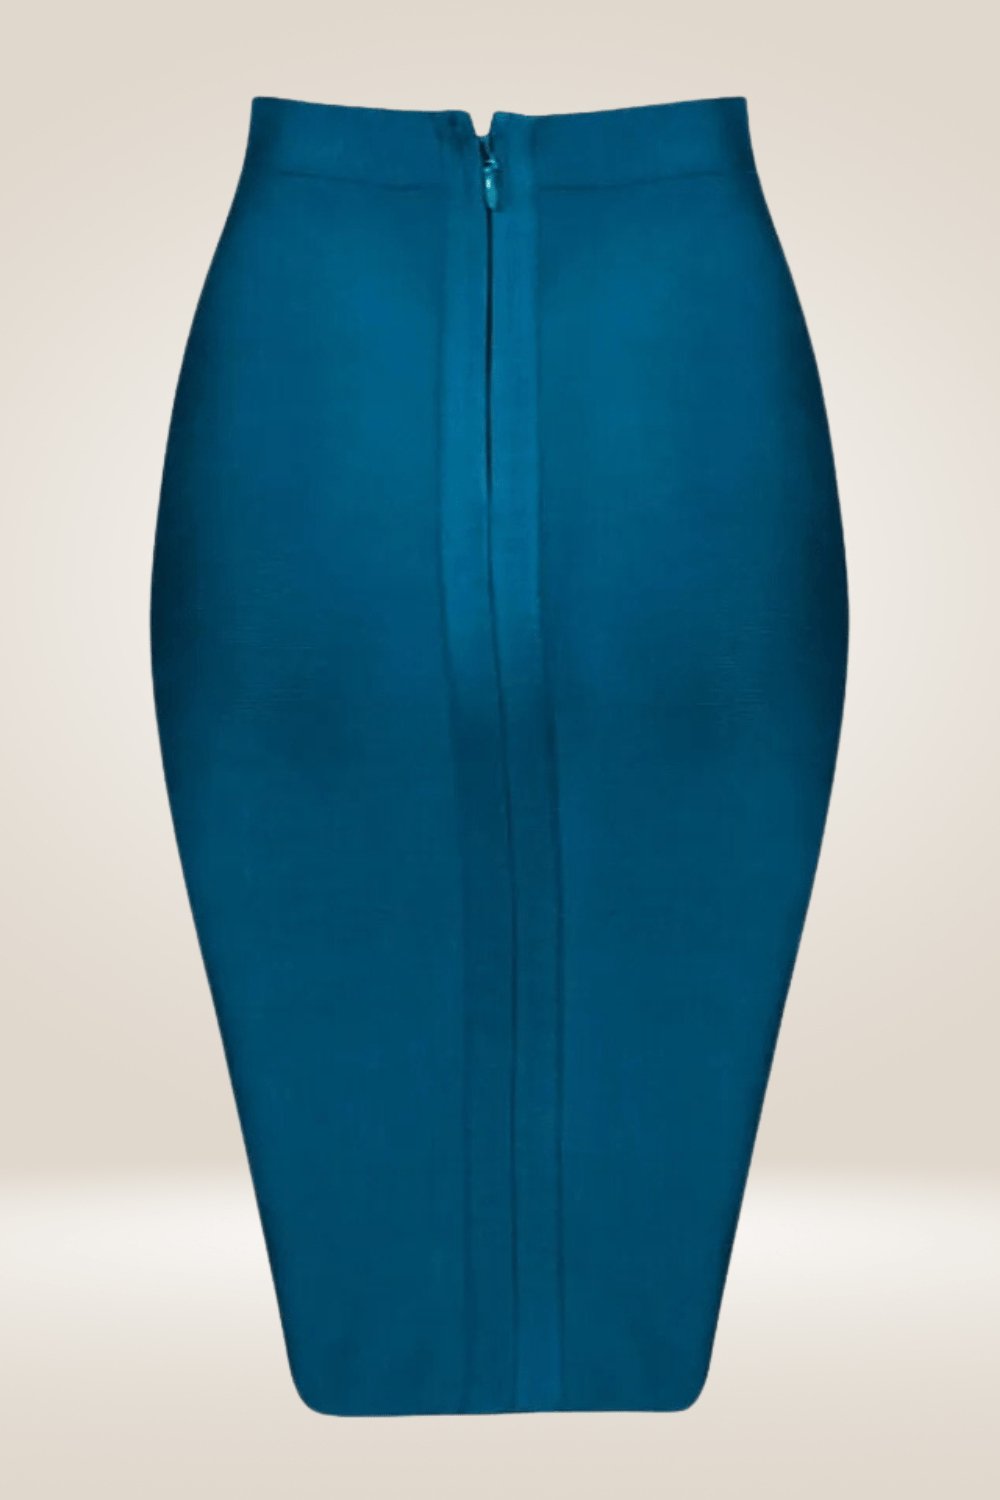 High Waisted Green Midi Skirt - TGC Boutique - Skirt